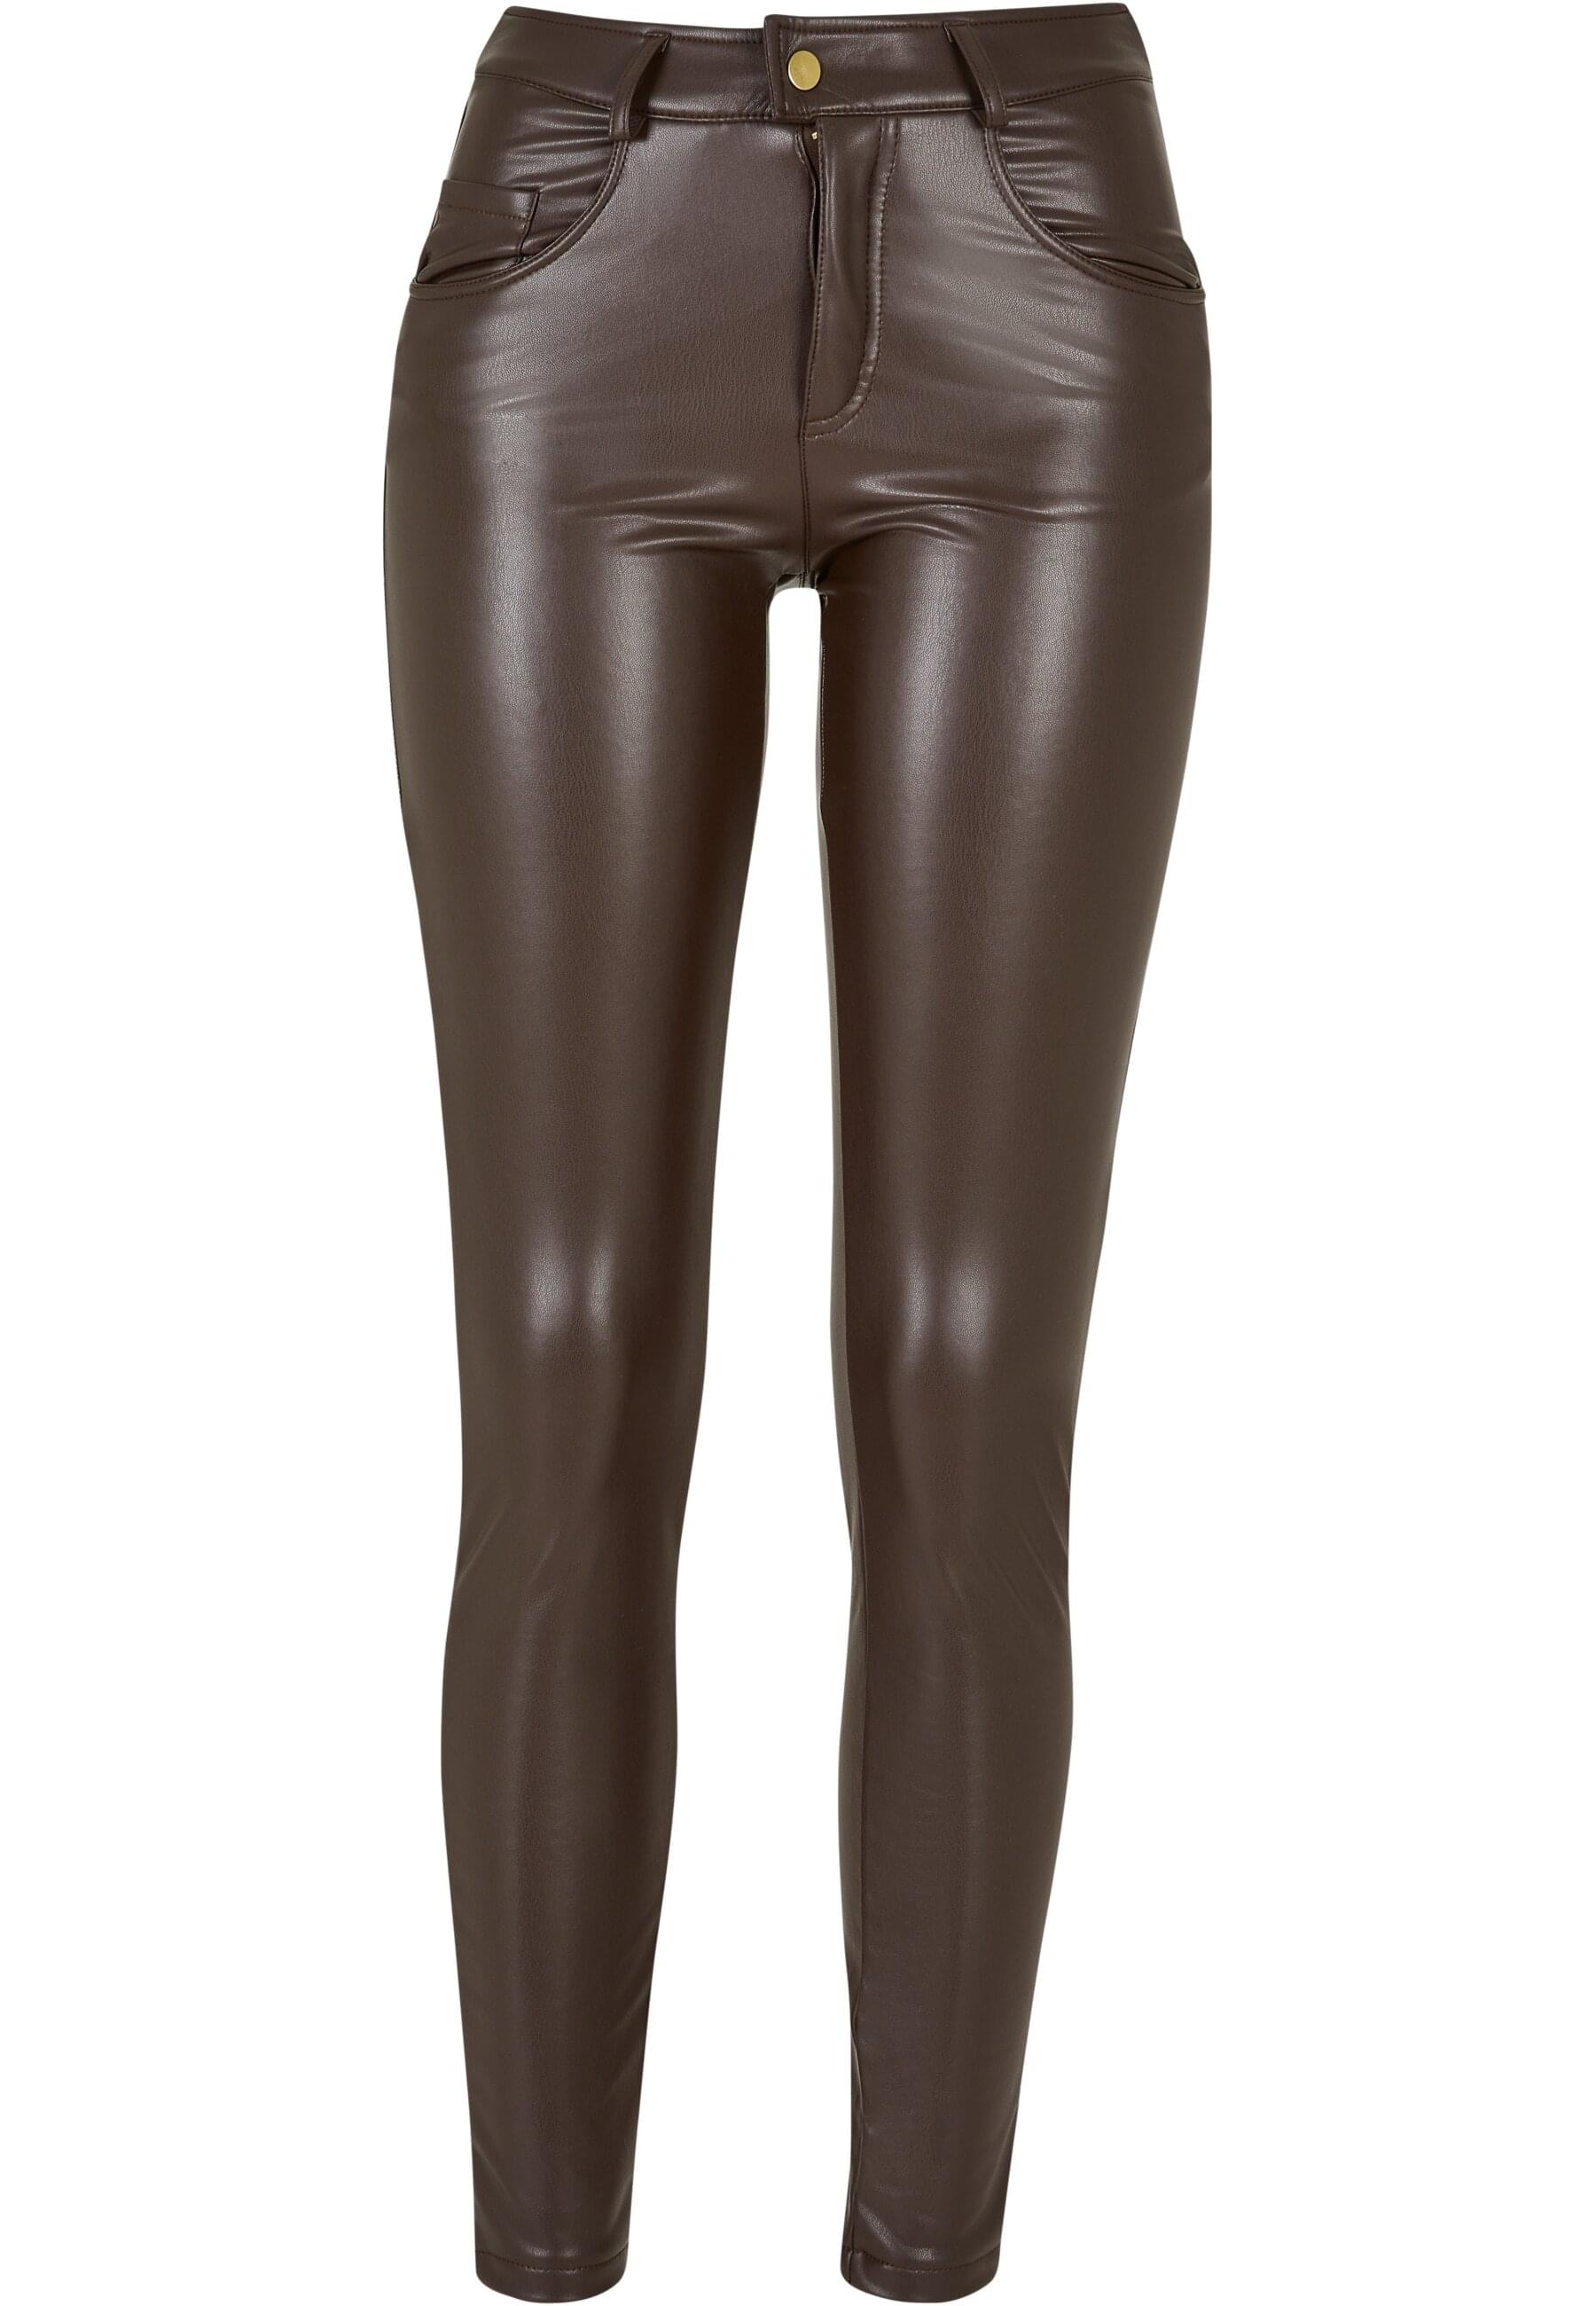 Mid BAUR URBAN Waist tlg.) Leather (1 Synthetic »Damen bestellen Jerseyhose CLASSICS Ladies online Pants«, |